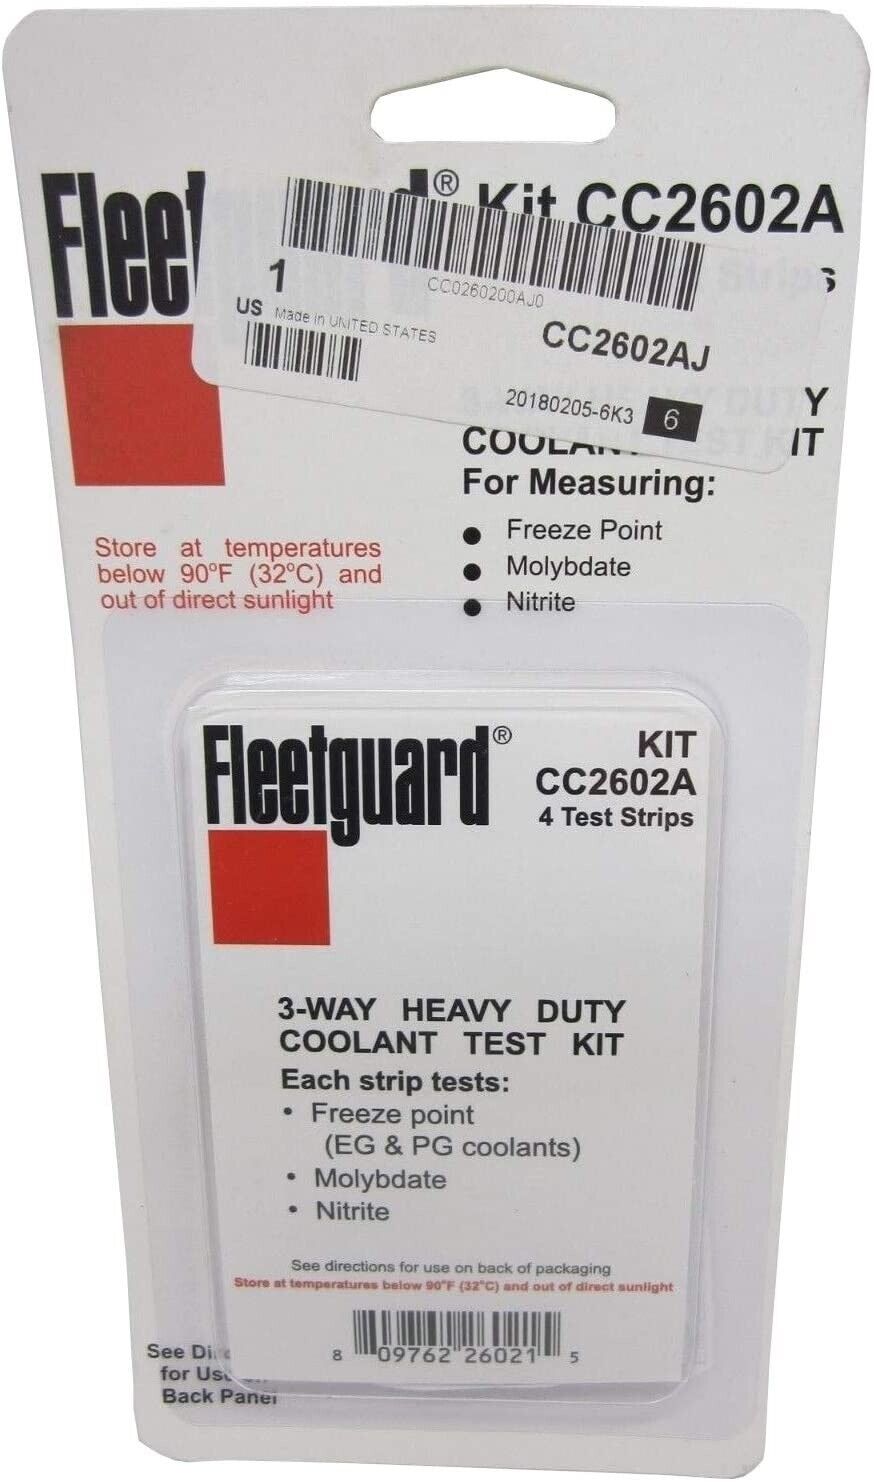 CC2602A Fleetguard Cooling Analysis.